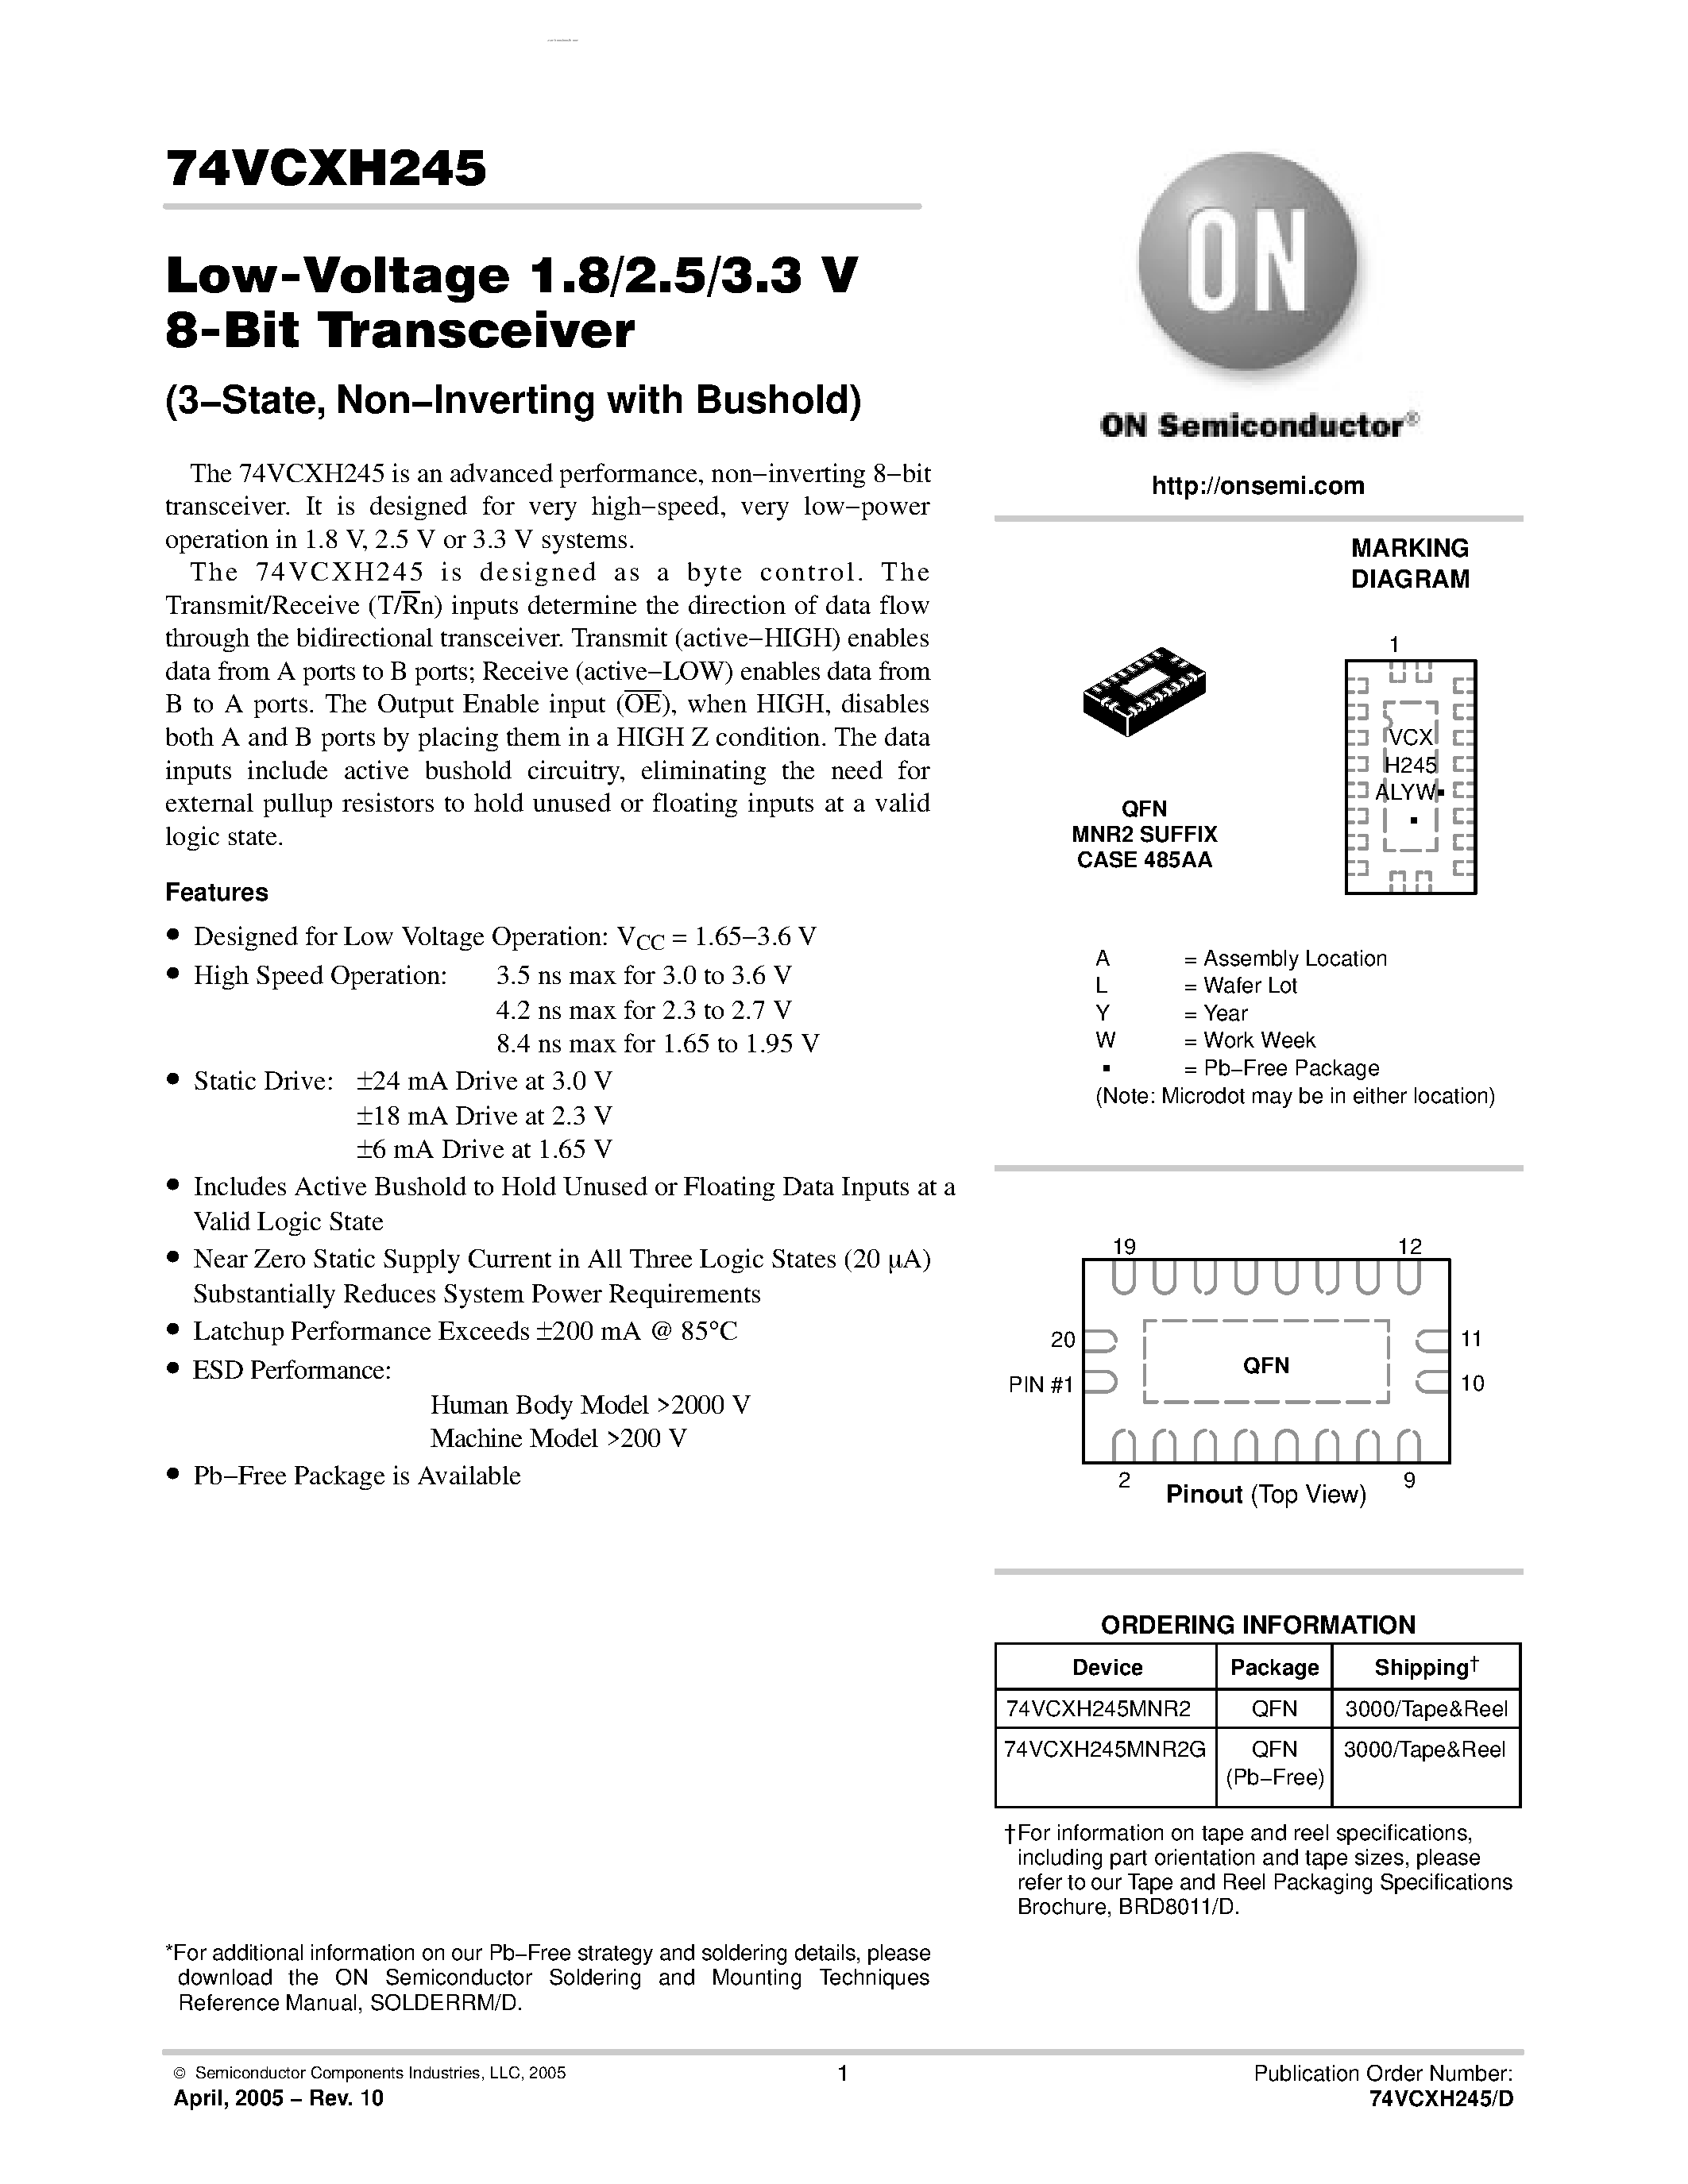 Даташит 74VCXH245 - Low-Voltage 1.8/2.5/3.3 V 8-Bit Transceiver страница 1